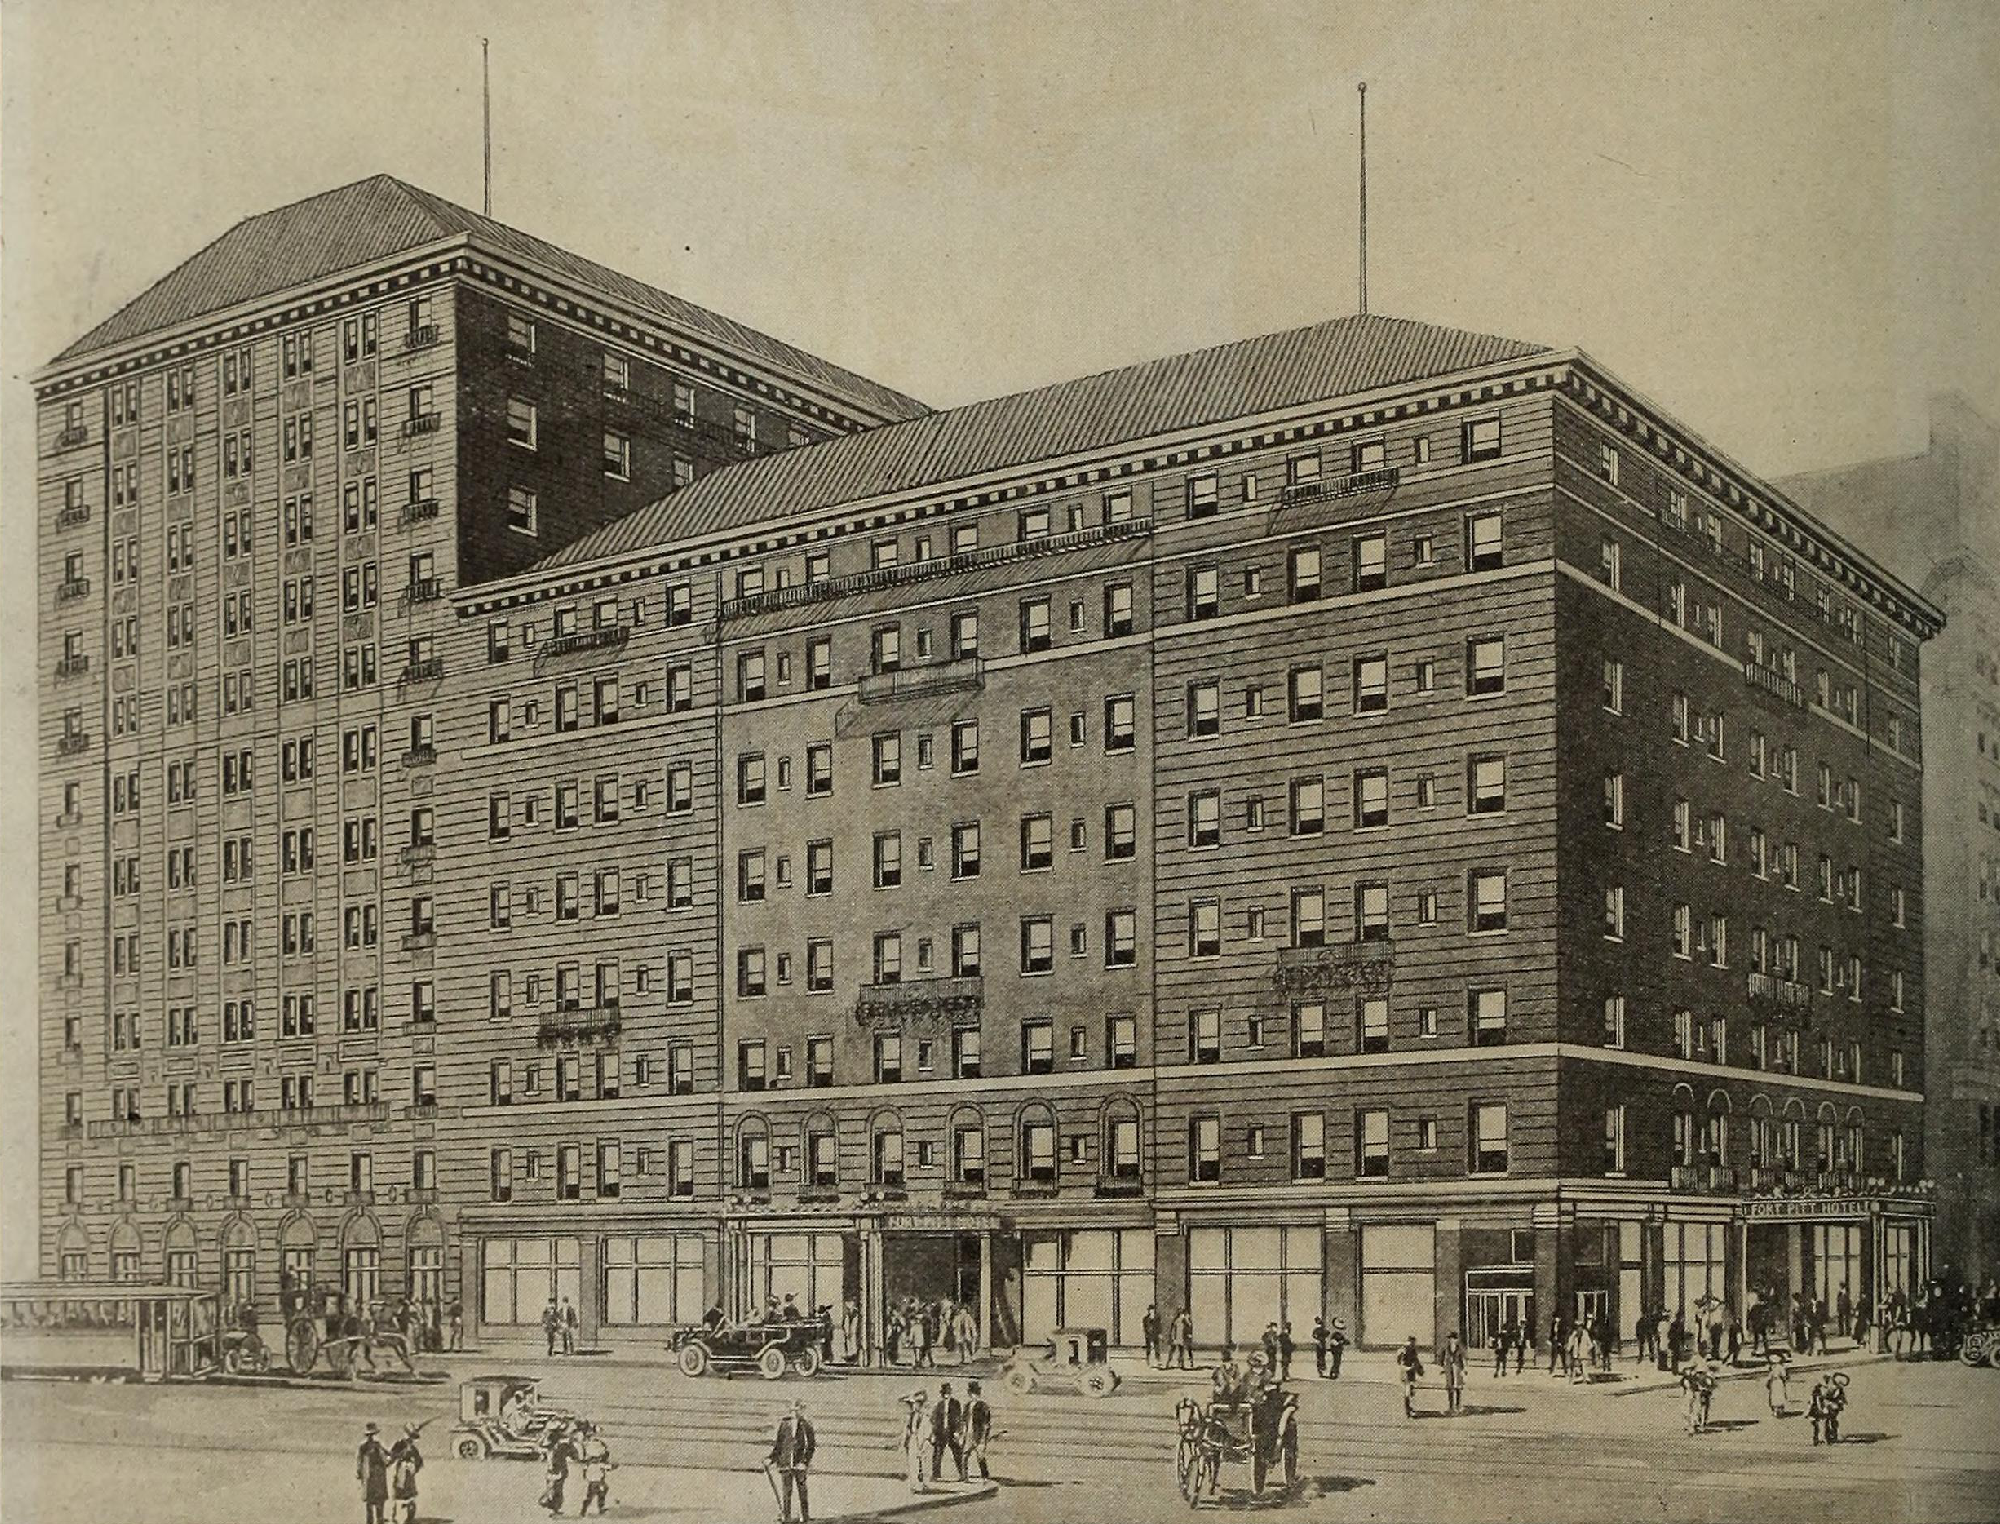 The Fort Pitt Hotel circa 1875.